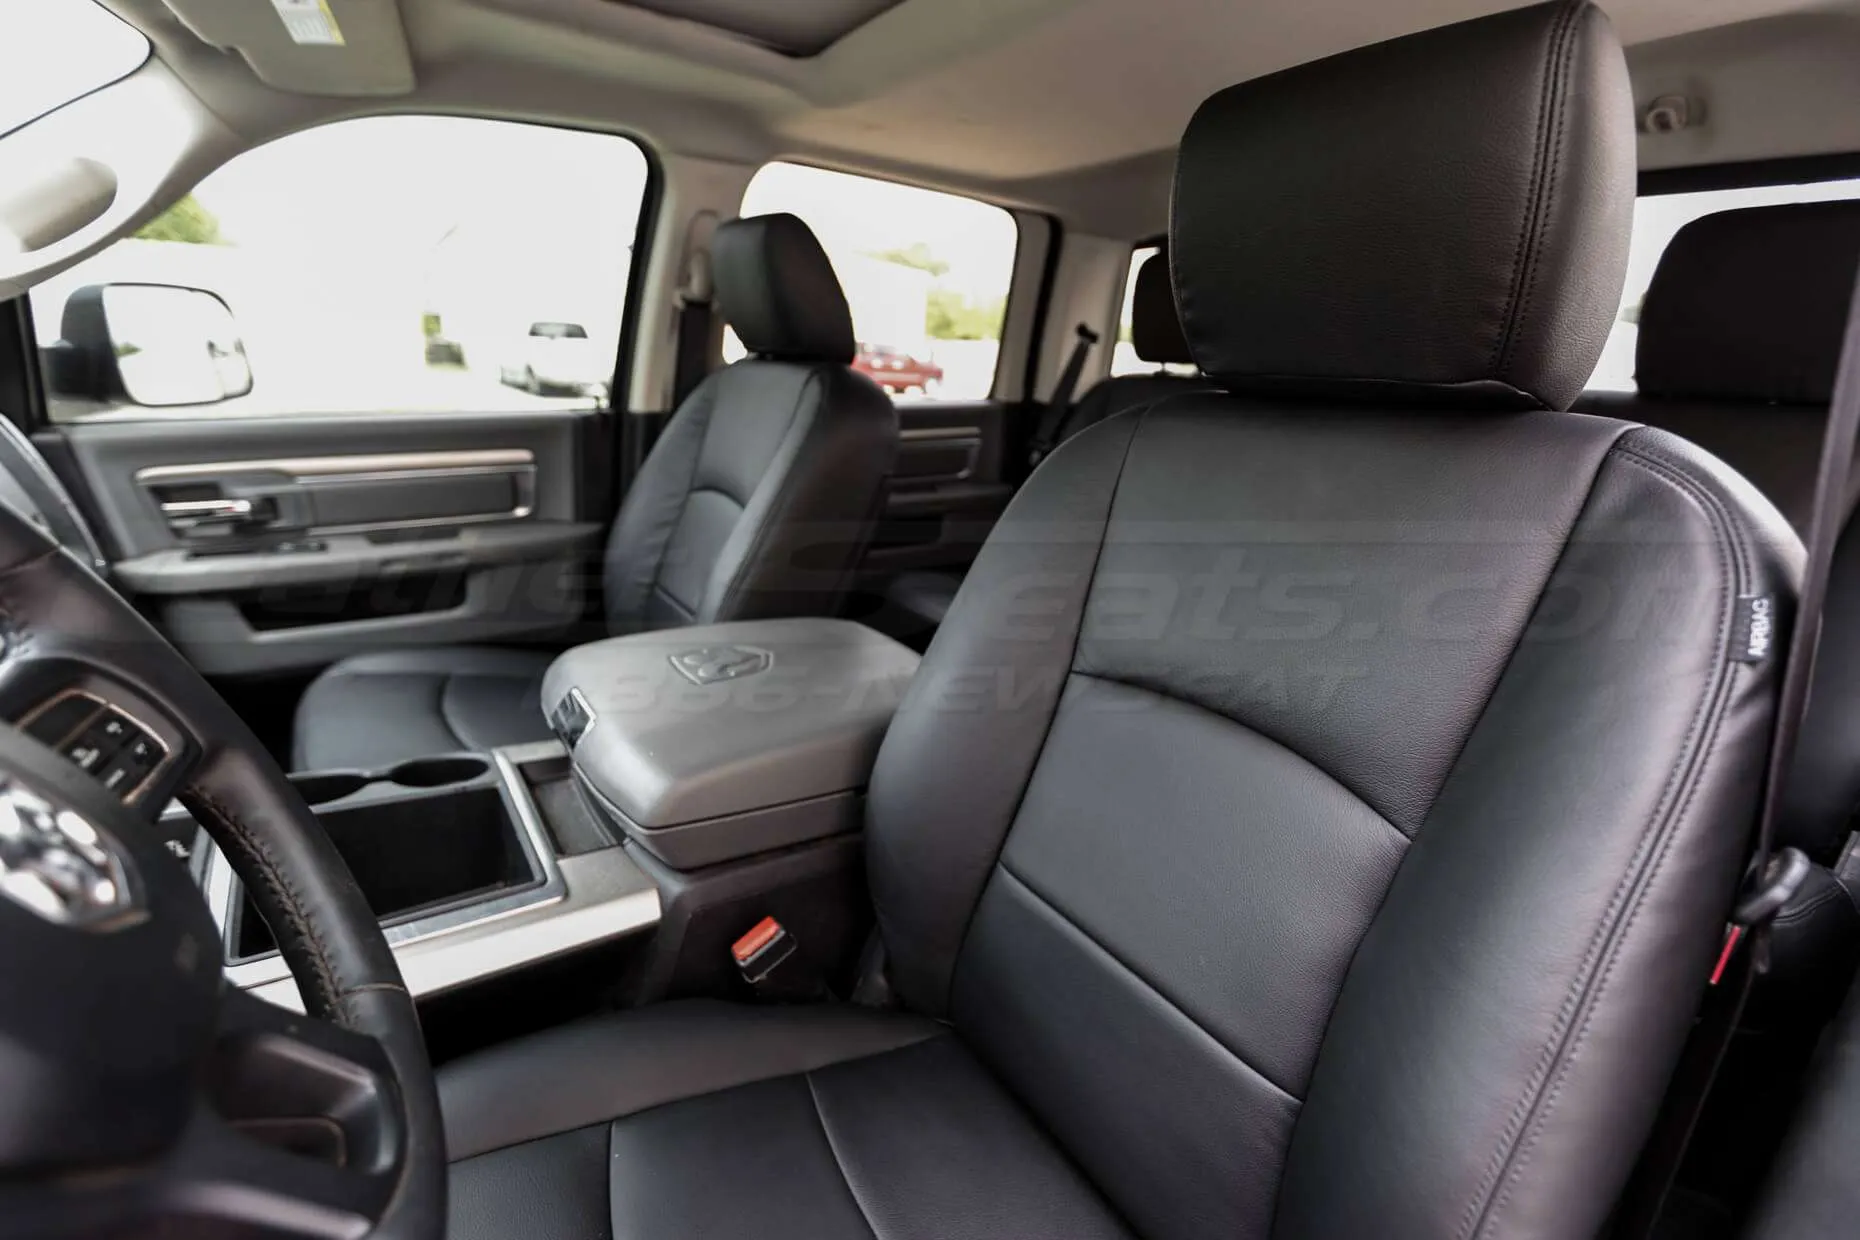 Dodge Ram Black leather seats - Front interior